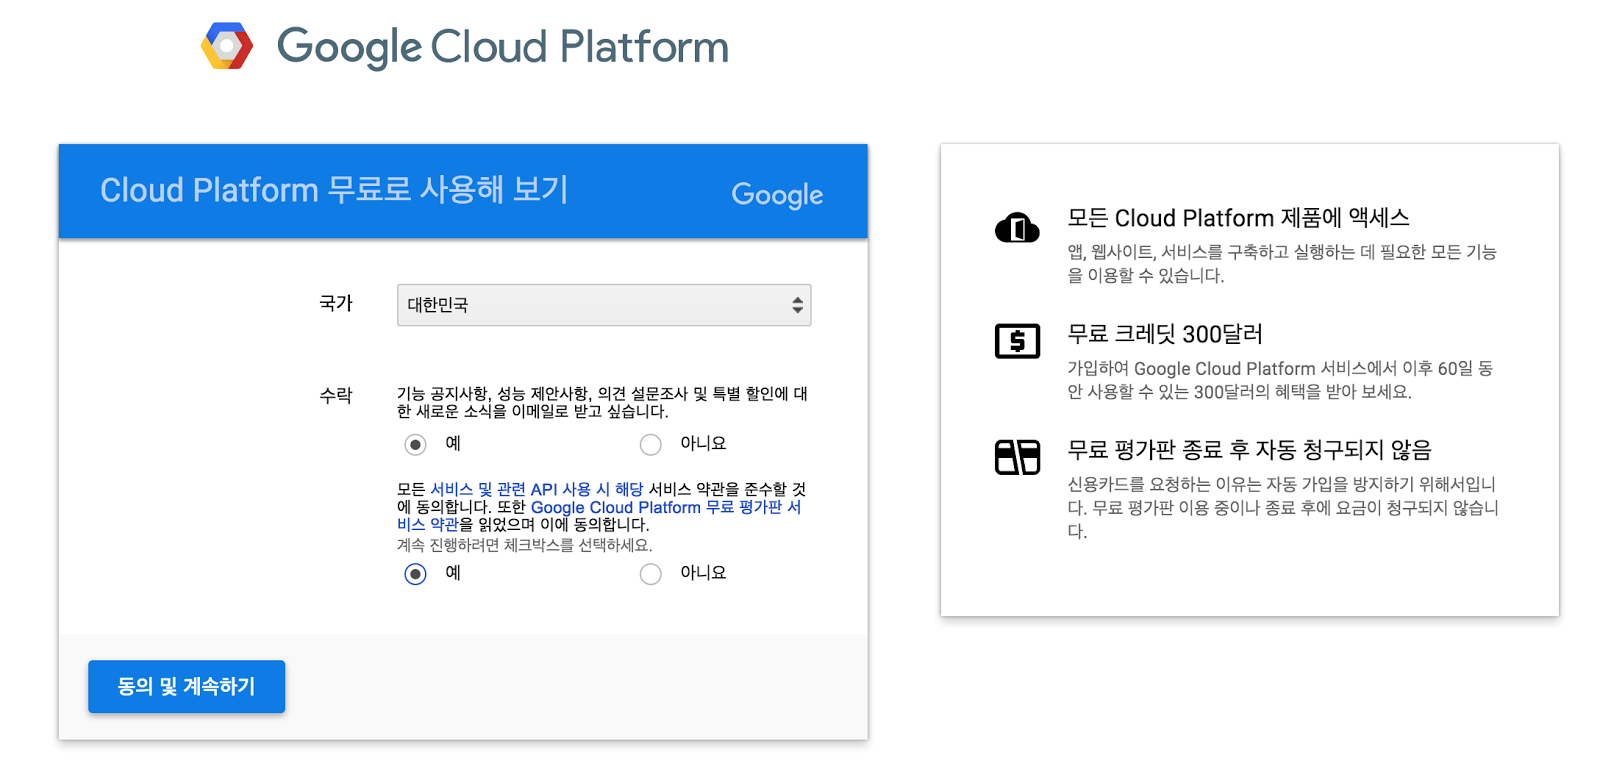 Google Cloud Platform 사용하기 - Comput Engine(Vm) 인스턴스 만들기